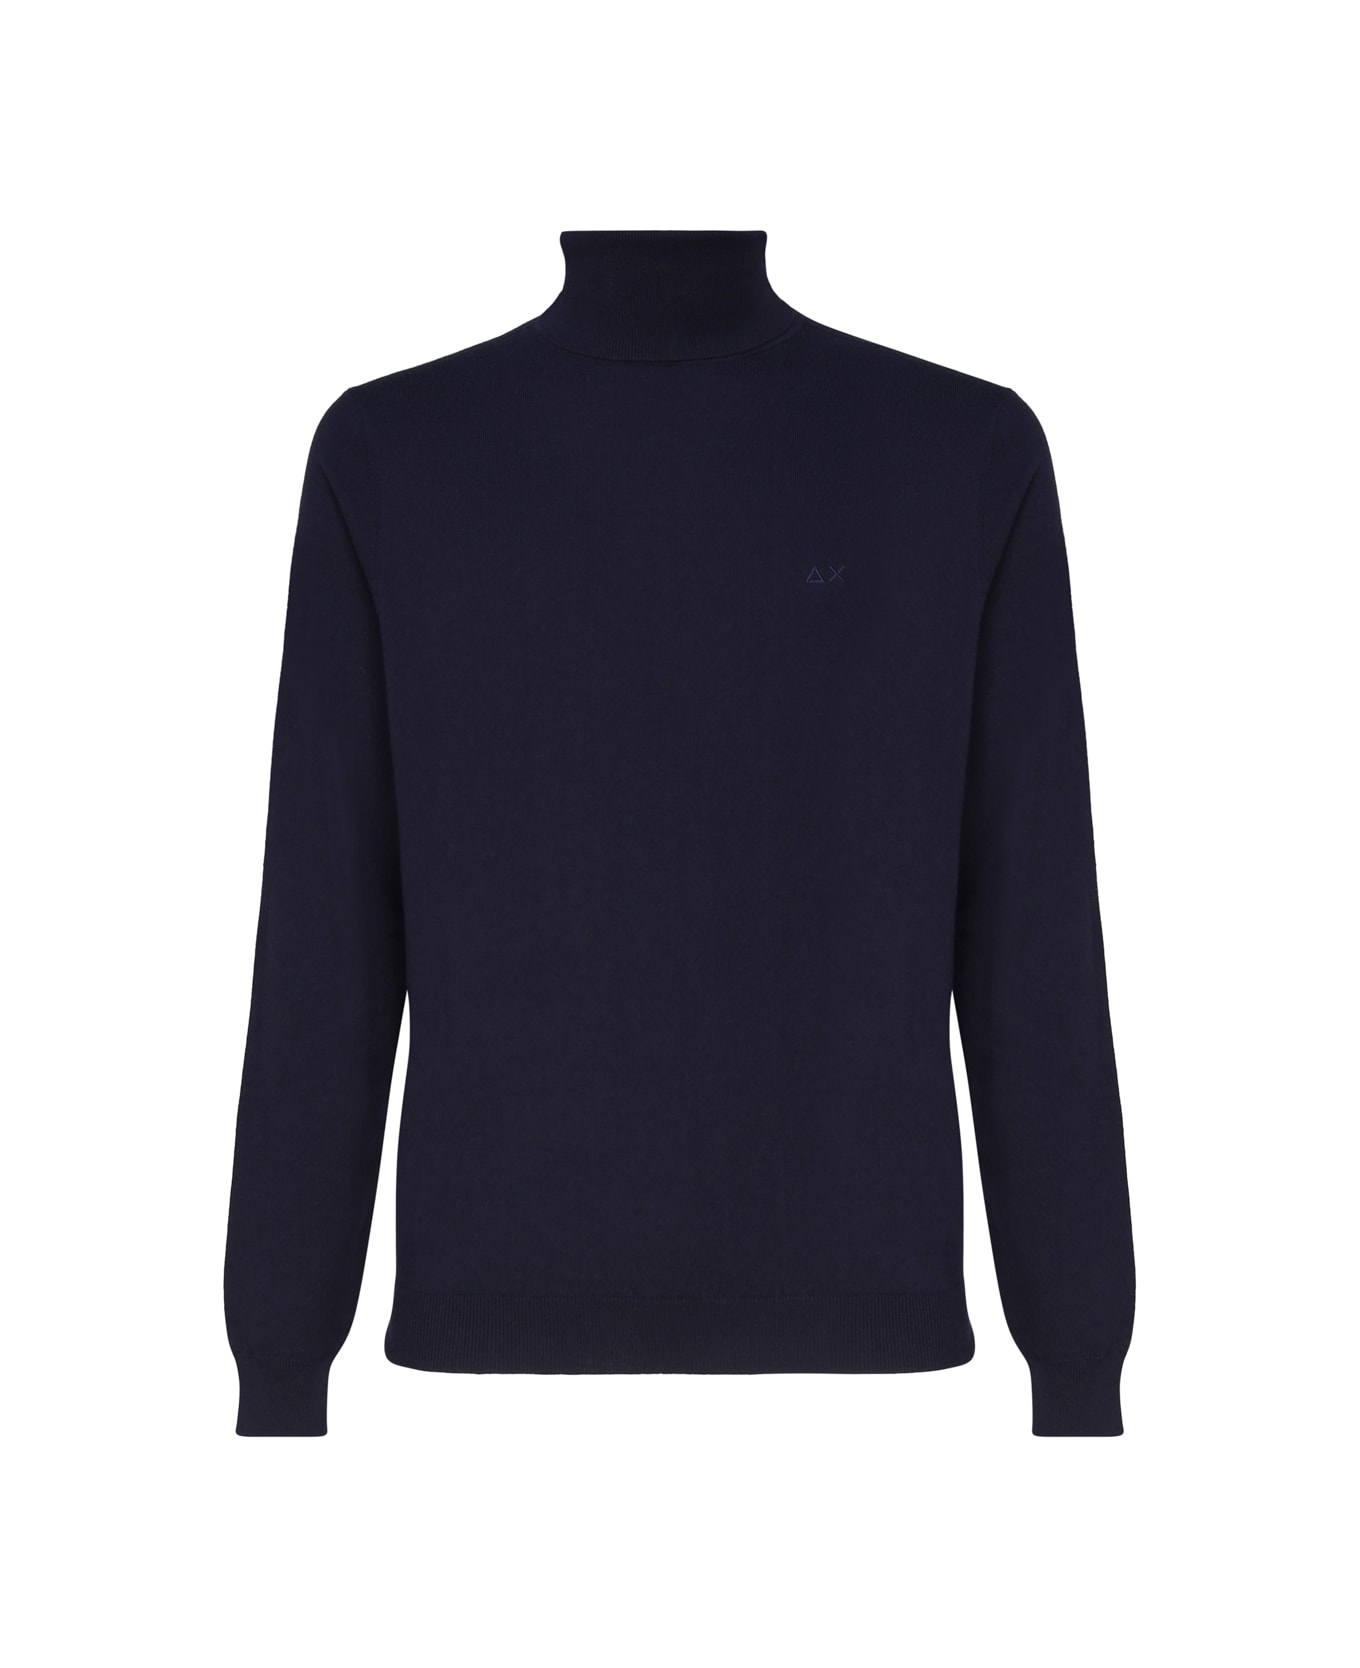 Sun 68 Wool Turtleneck Sweater - NAVY BLUE